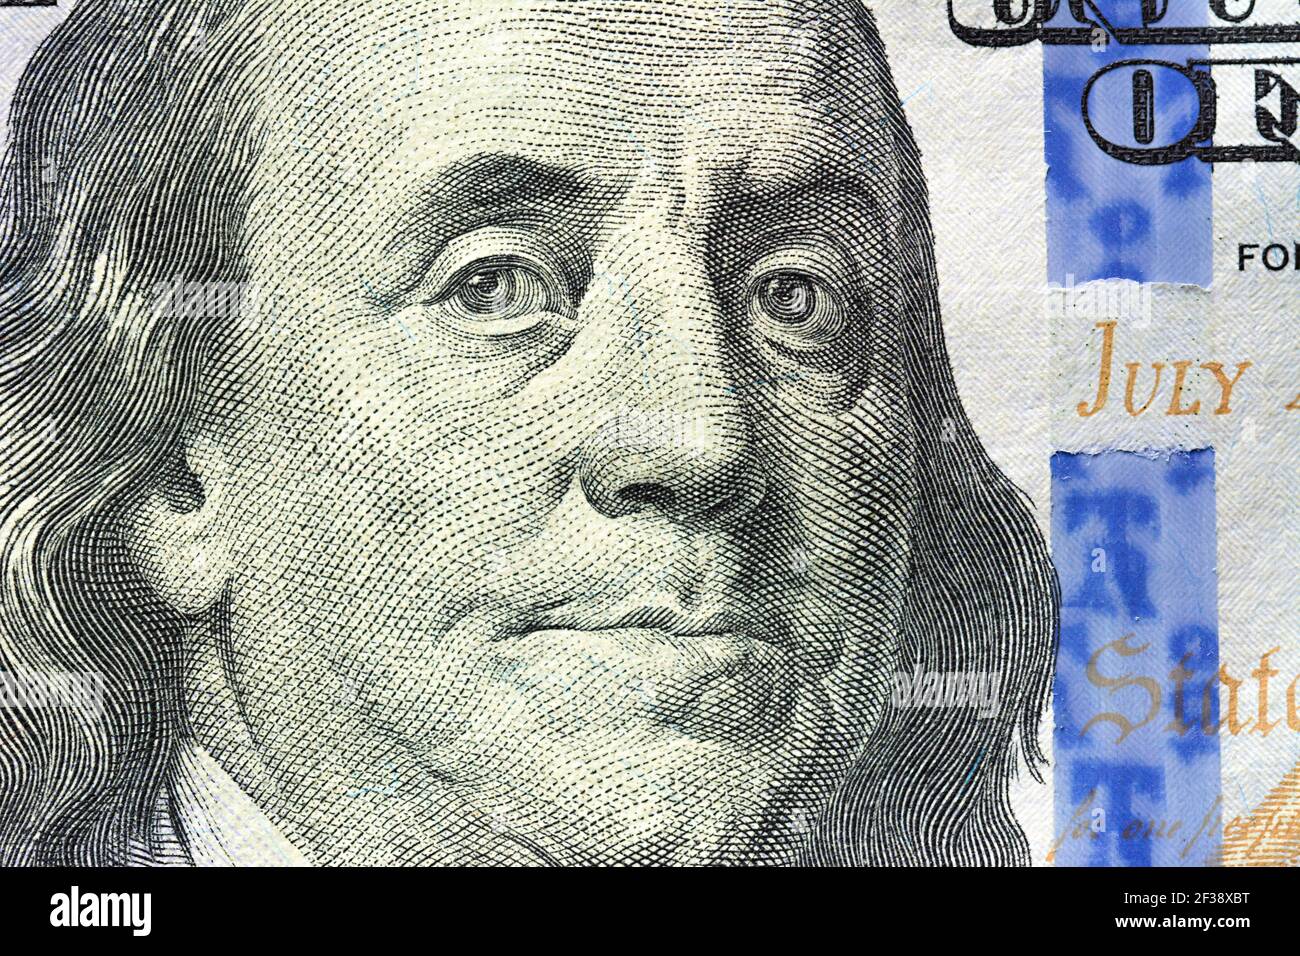 Close up of Benjamin Franklin face sur 100 US dollar bill Banque D'Images